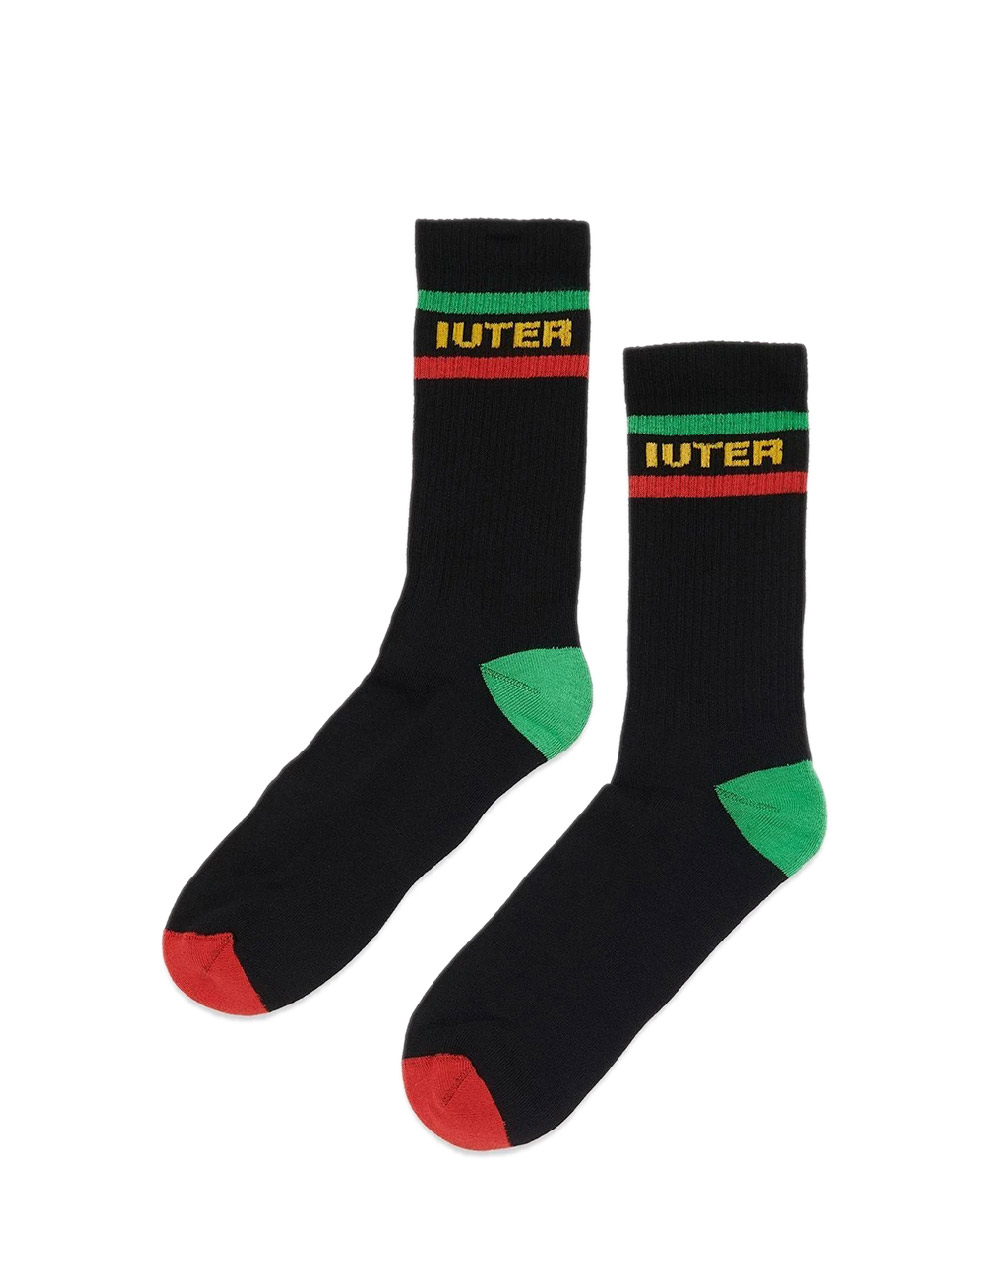 IUTER – Kingston Socks